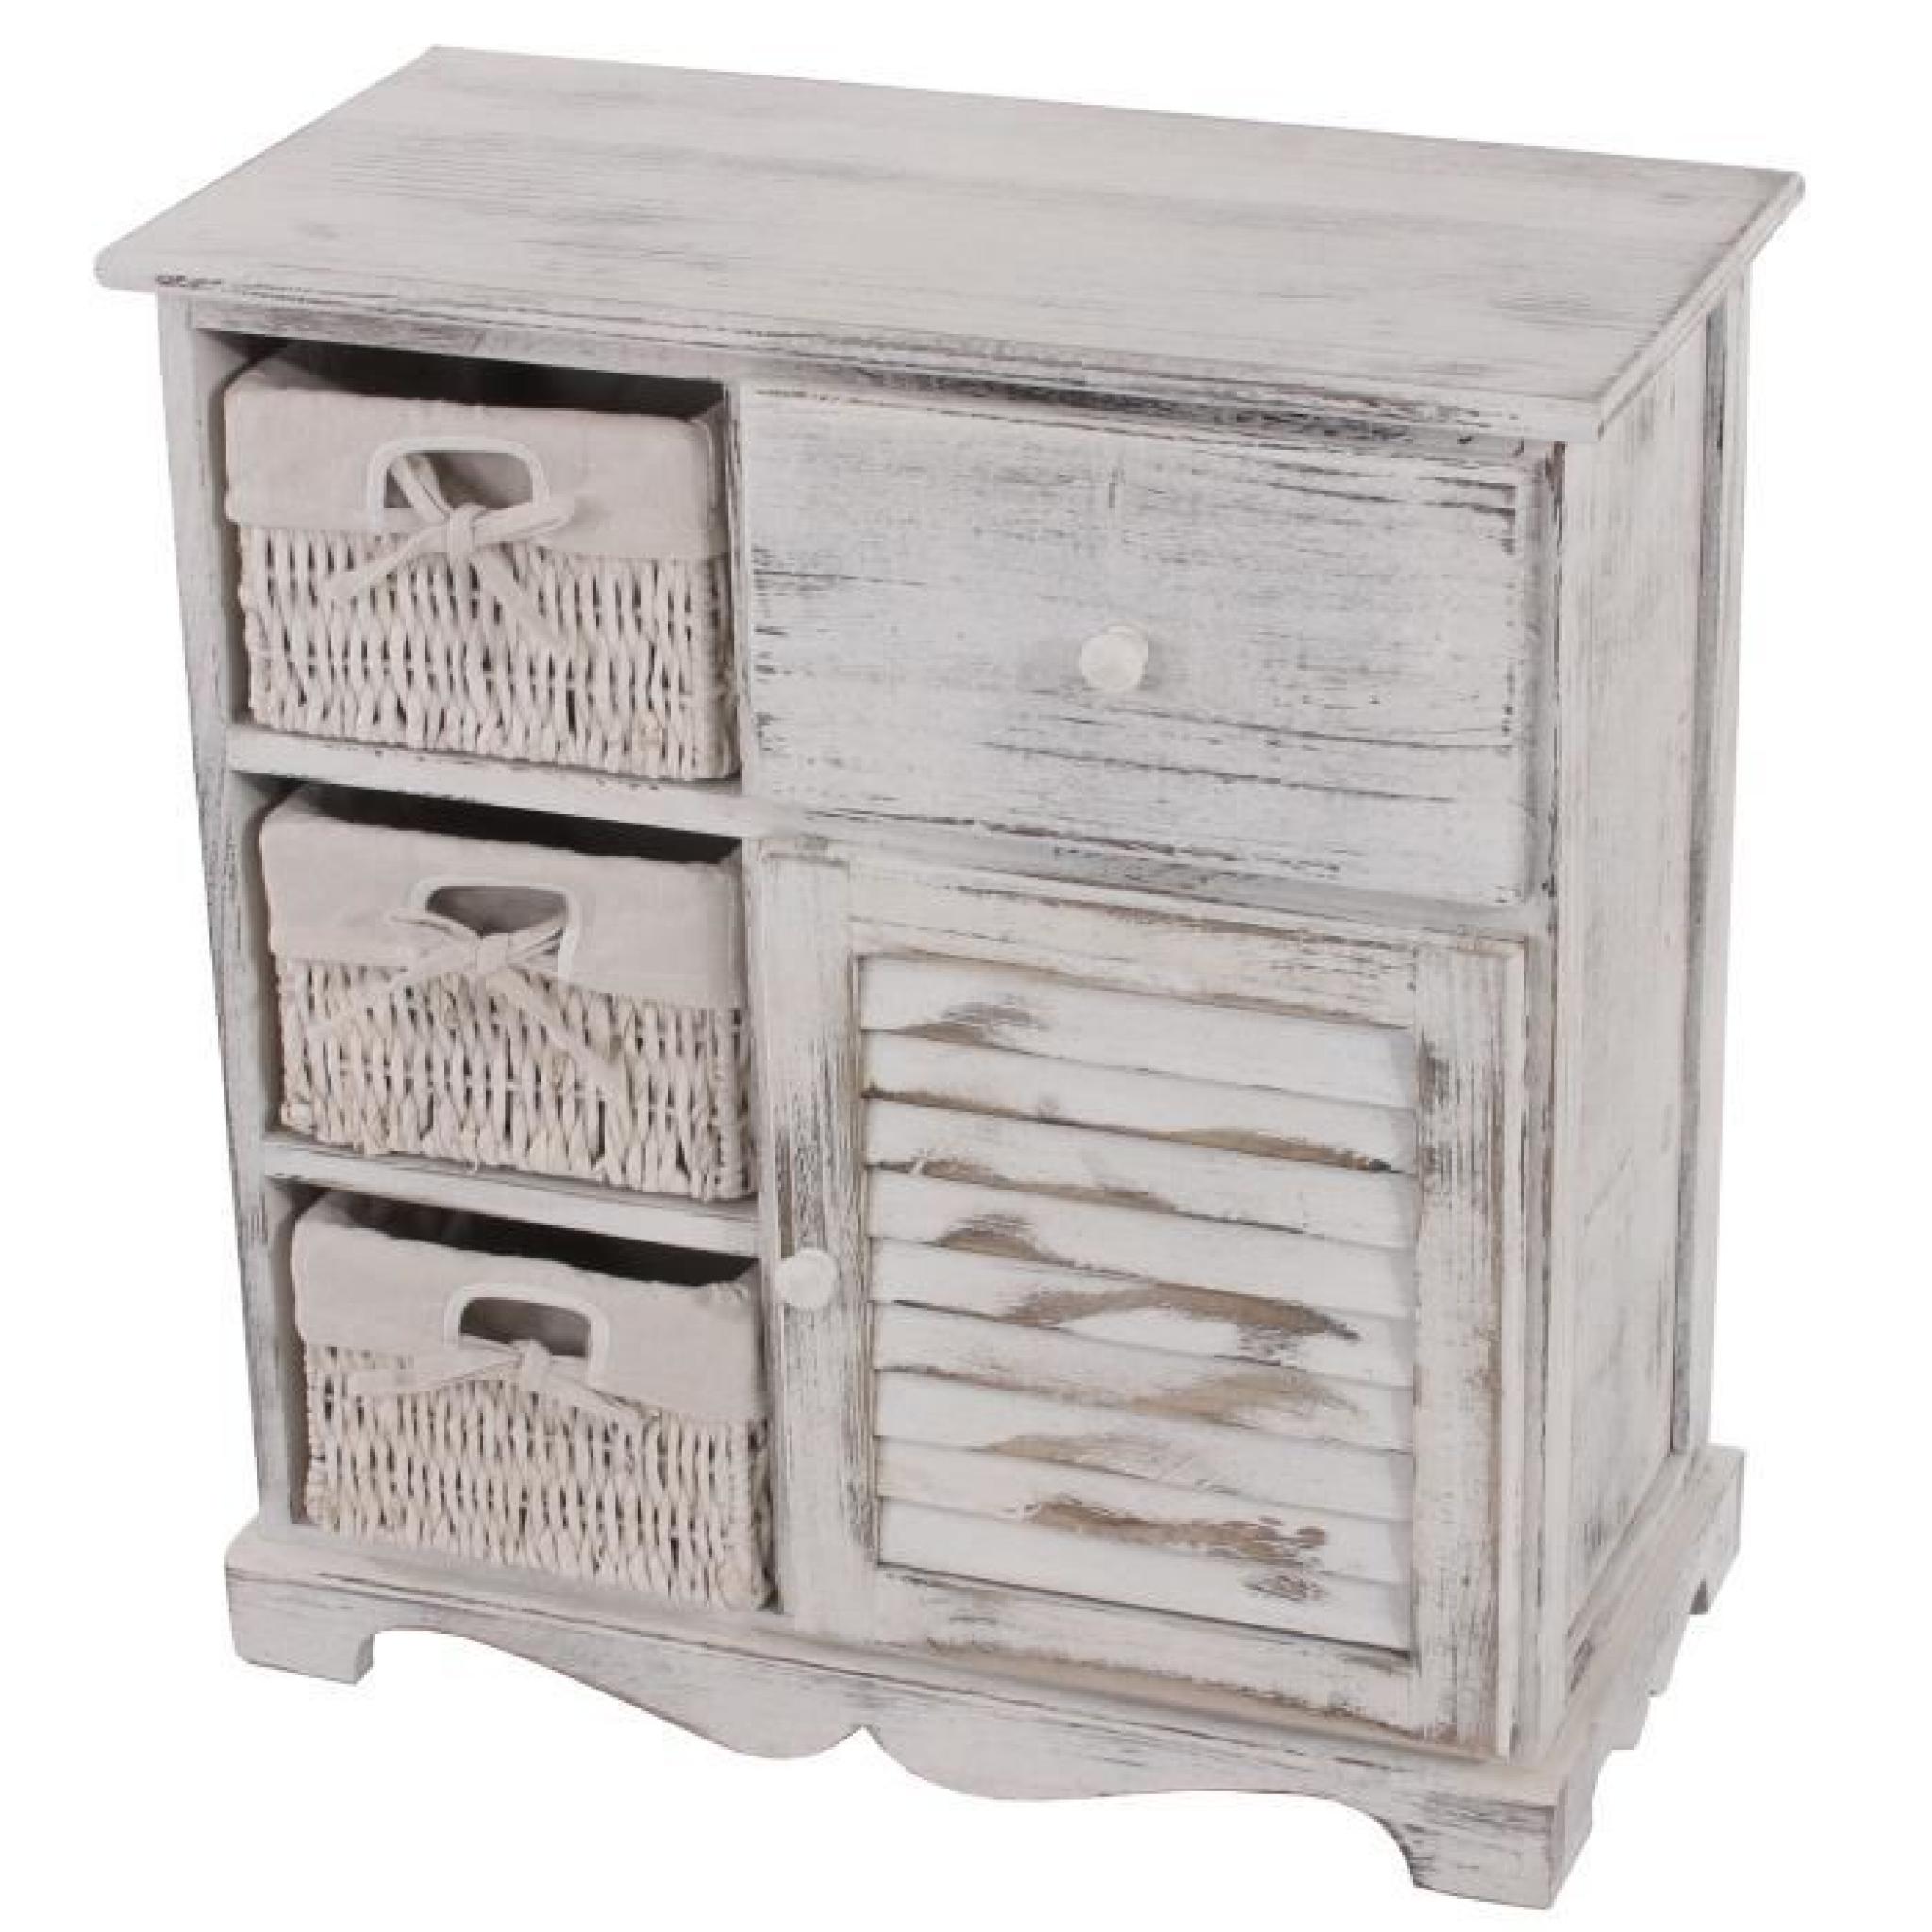 Commode / table d'appoint / armoire,3 paniers,1 tiroir,60x30x63cm, shabby, vintage, blanc.